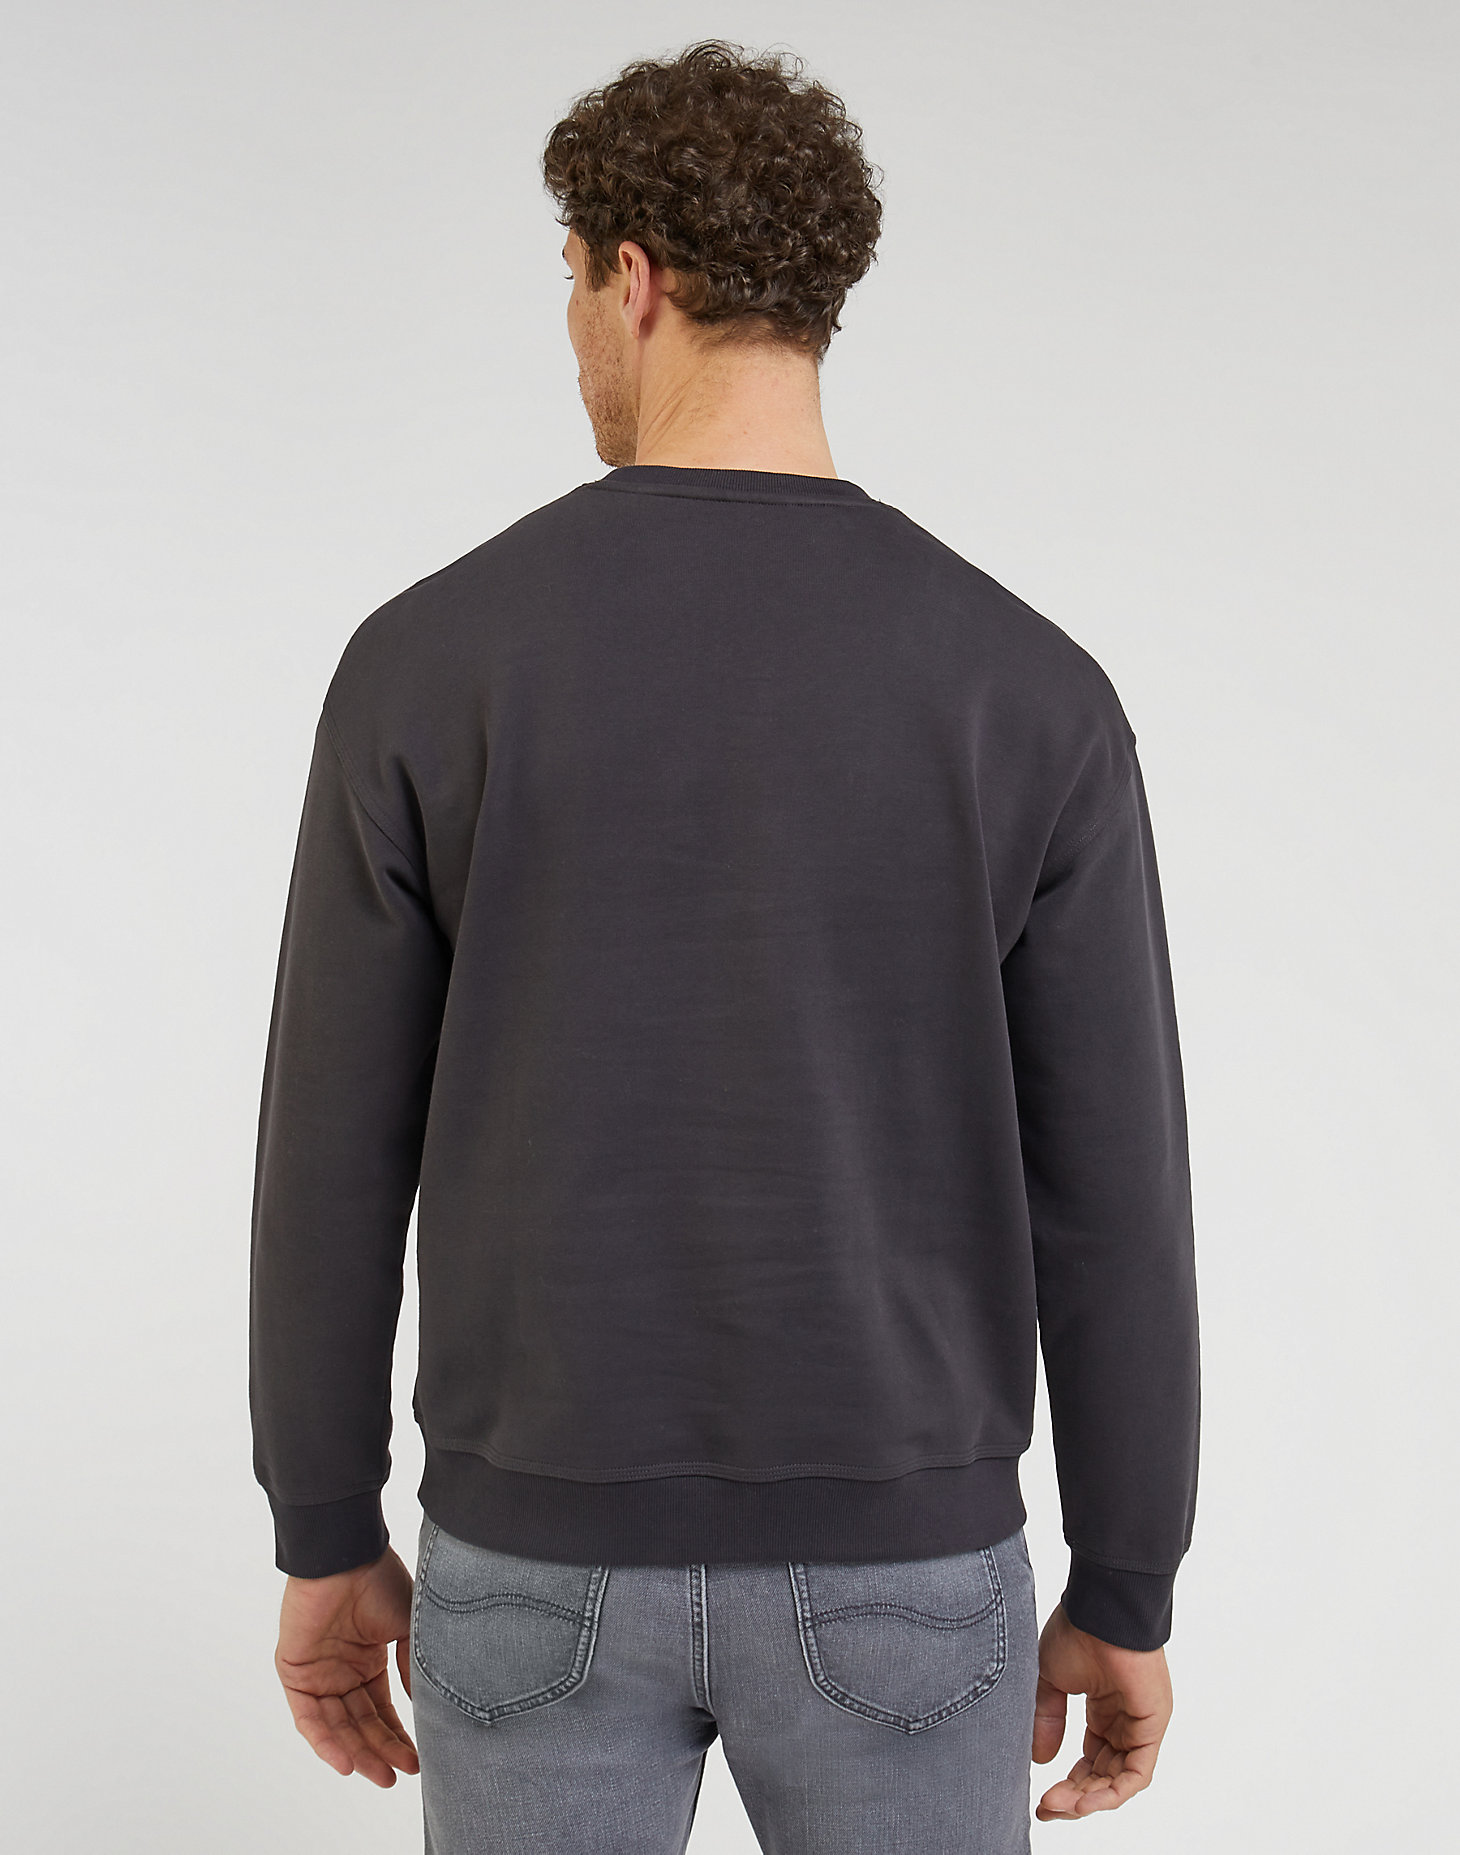 Workwear Sweatshirt in Washed Black alternative view 1